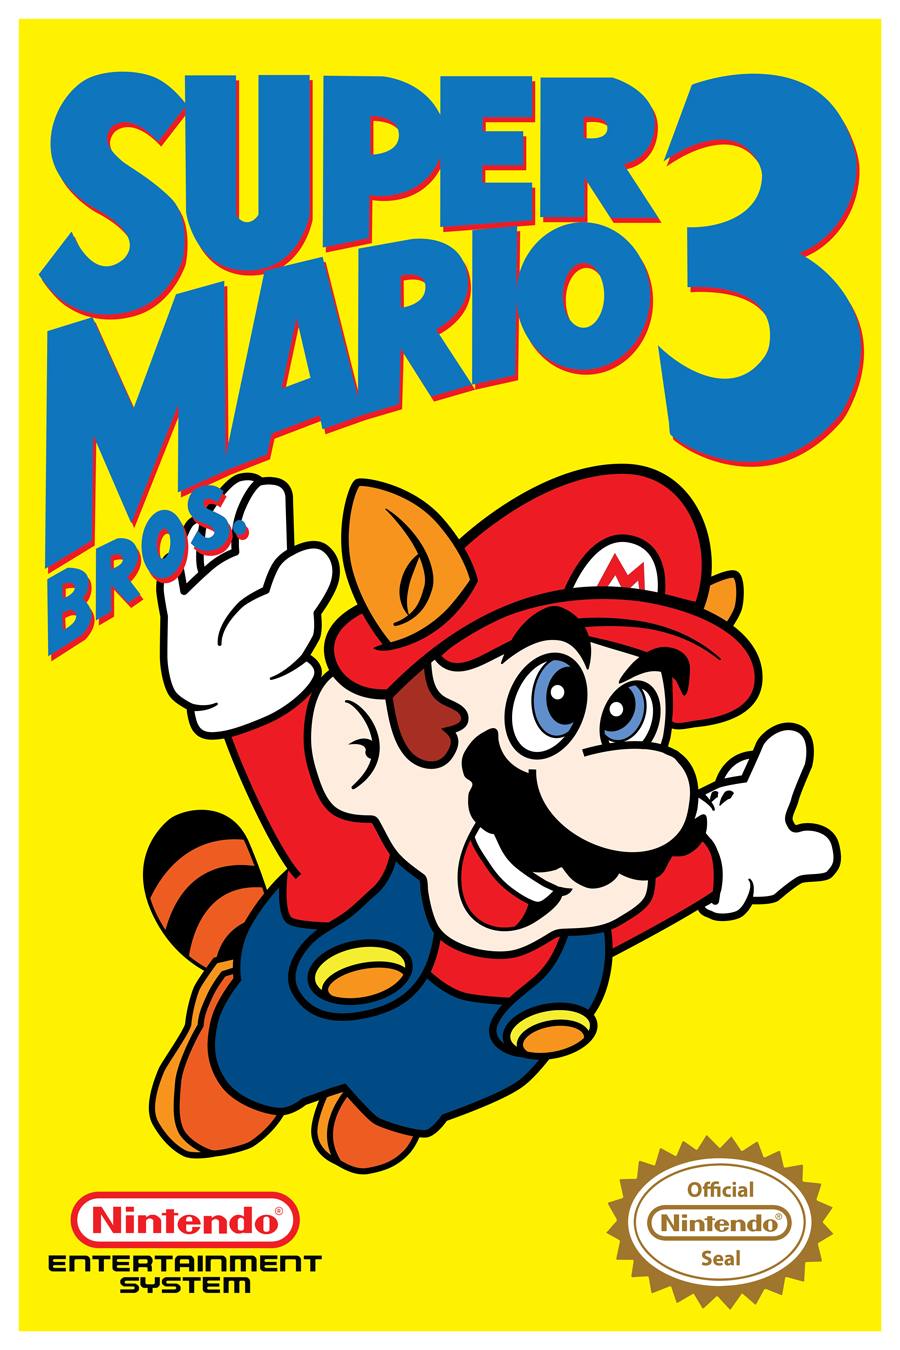 Super Mario Bros 3 Poster Nintendo 8 Bits Nes Video Game Classic Series Cover Prints 8606